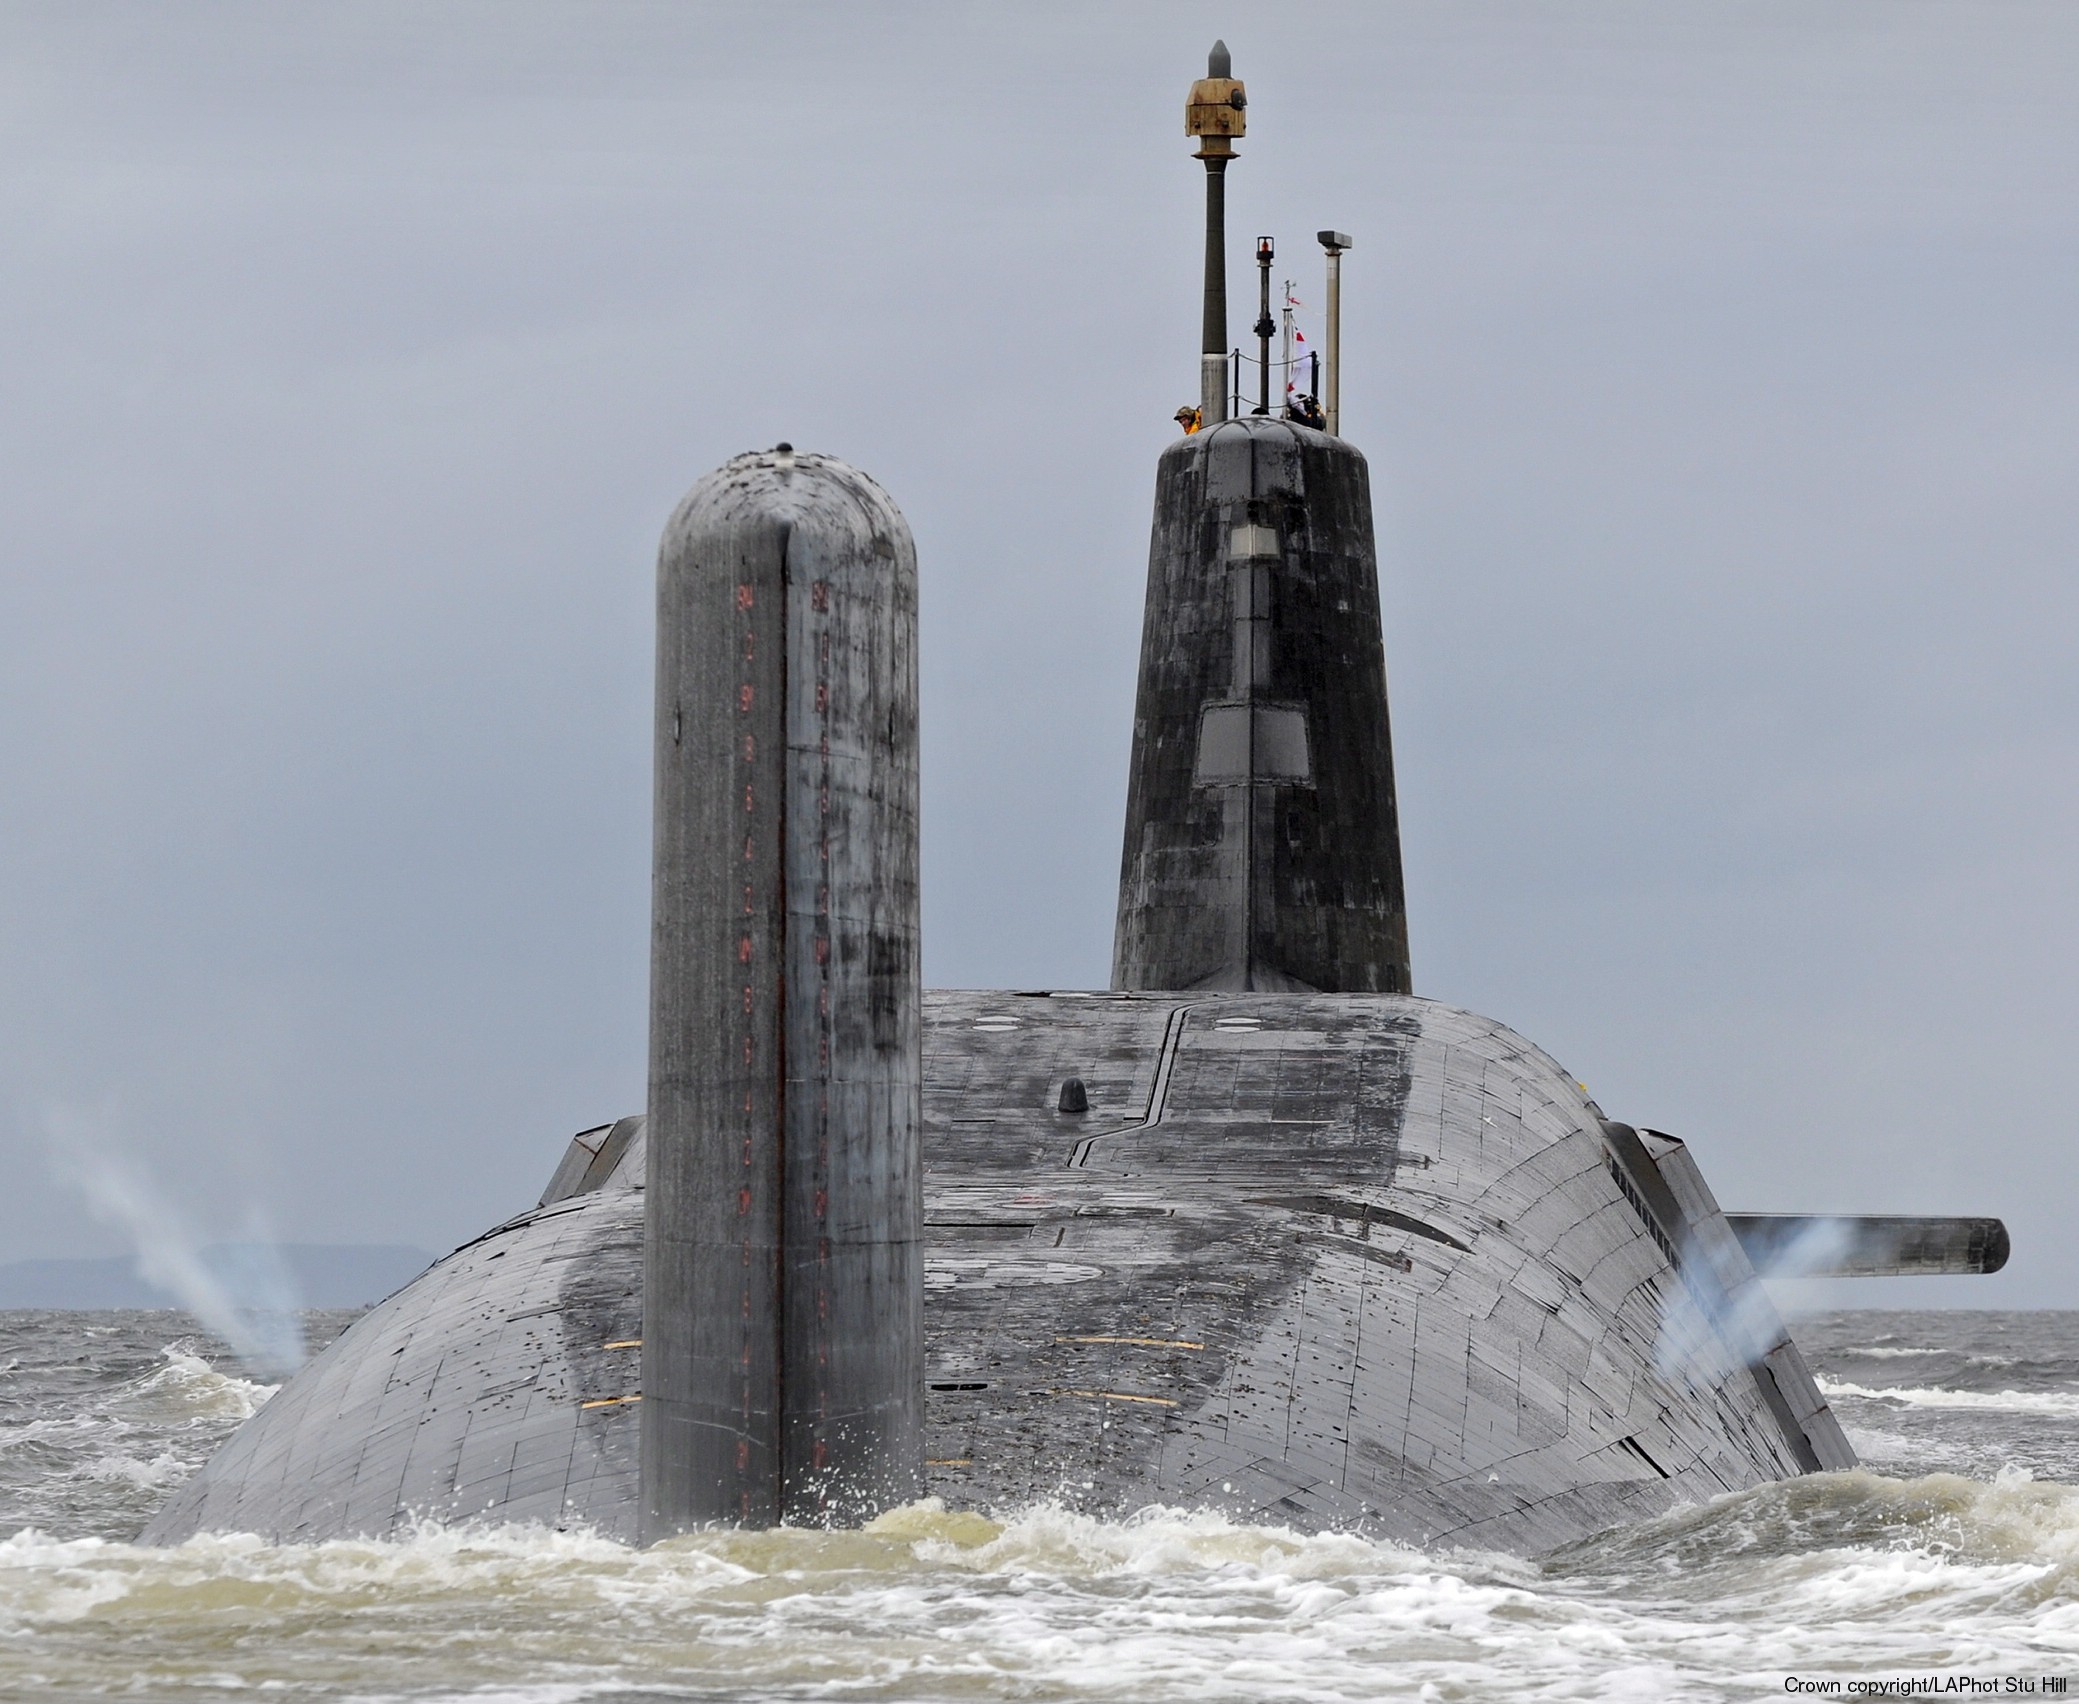 vanguard class ballistic missile submarine ssbn nuclear trident slbm royal navy 11c